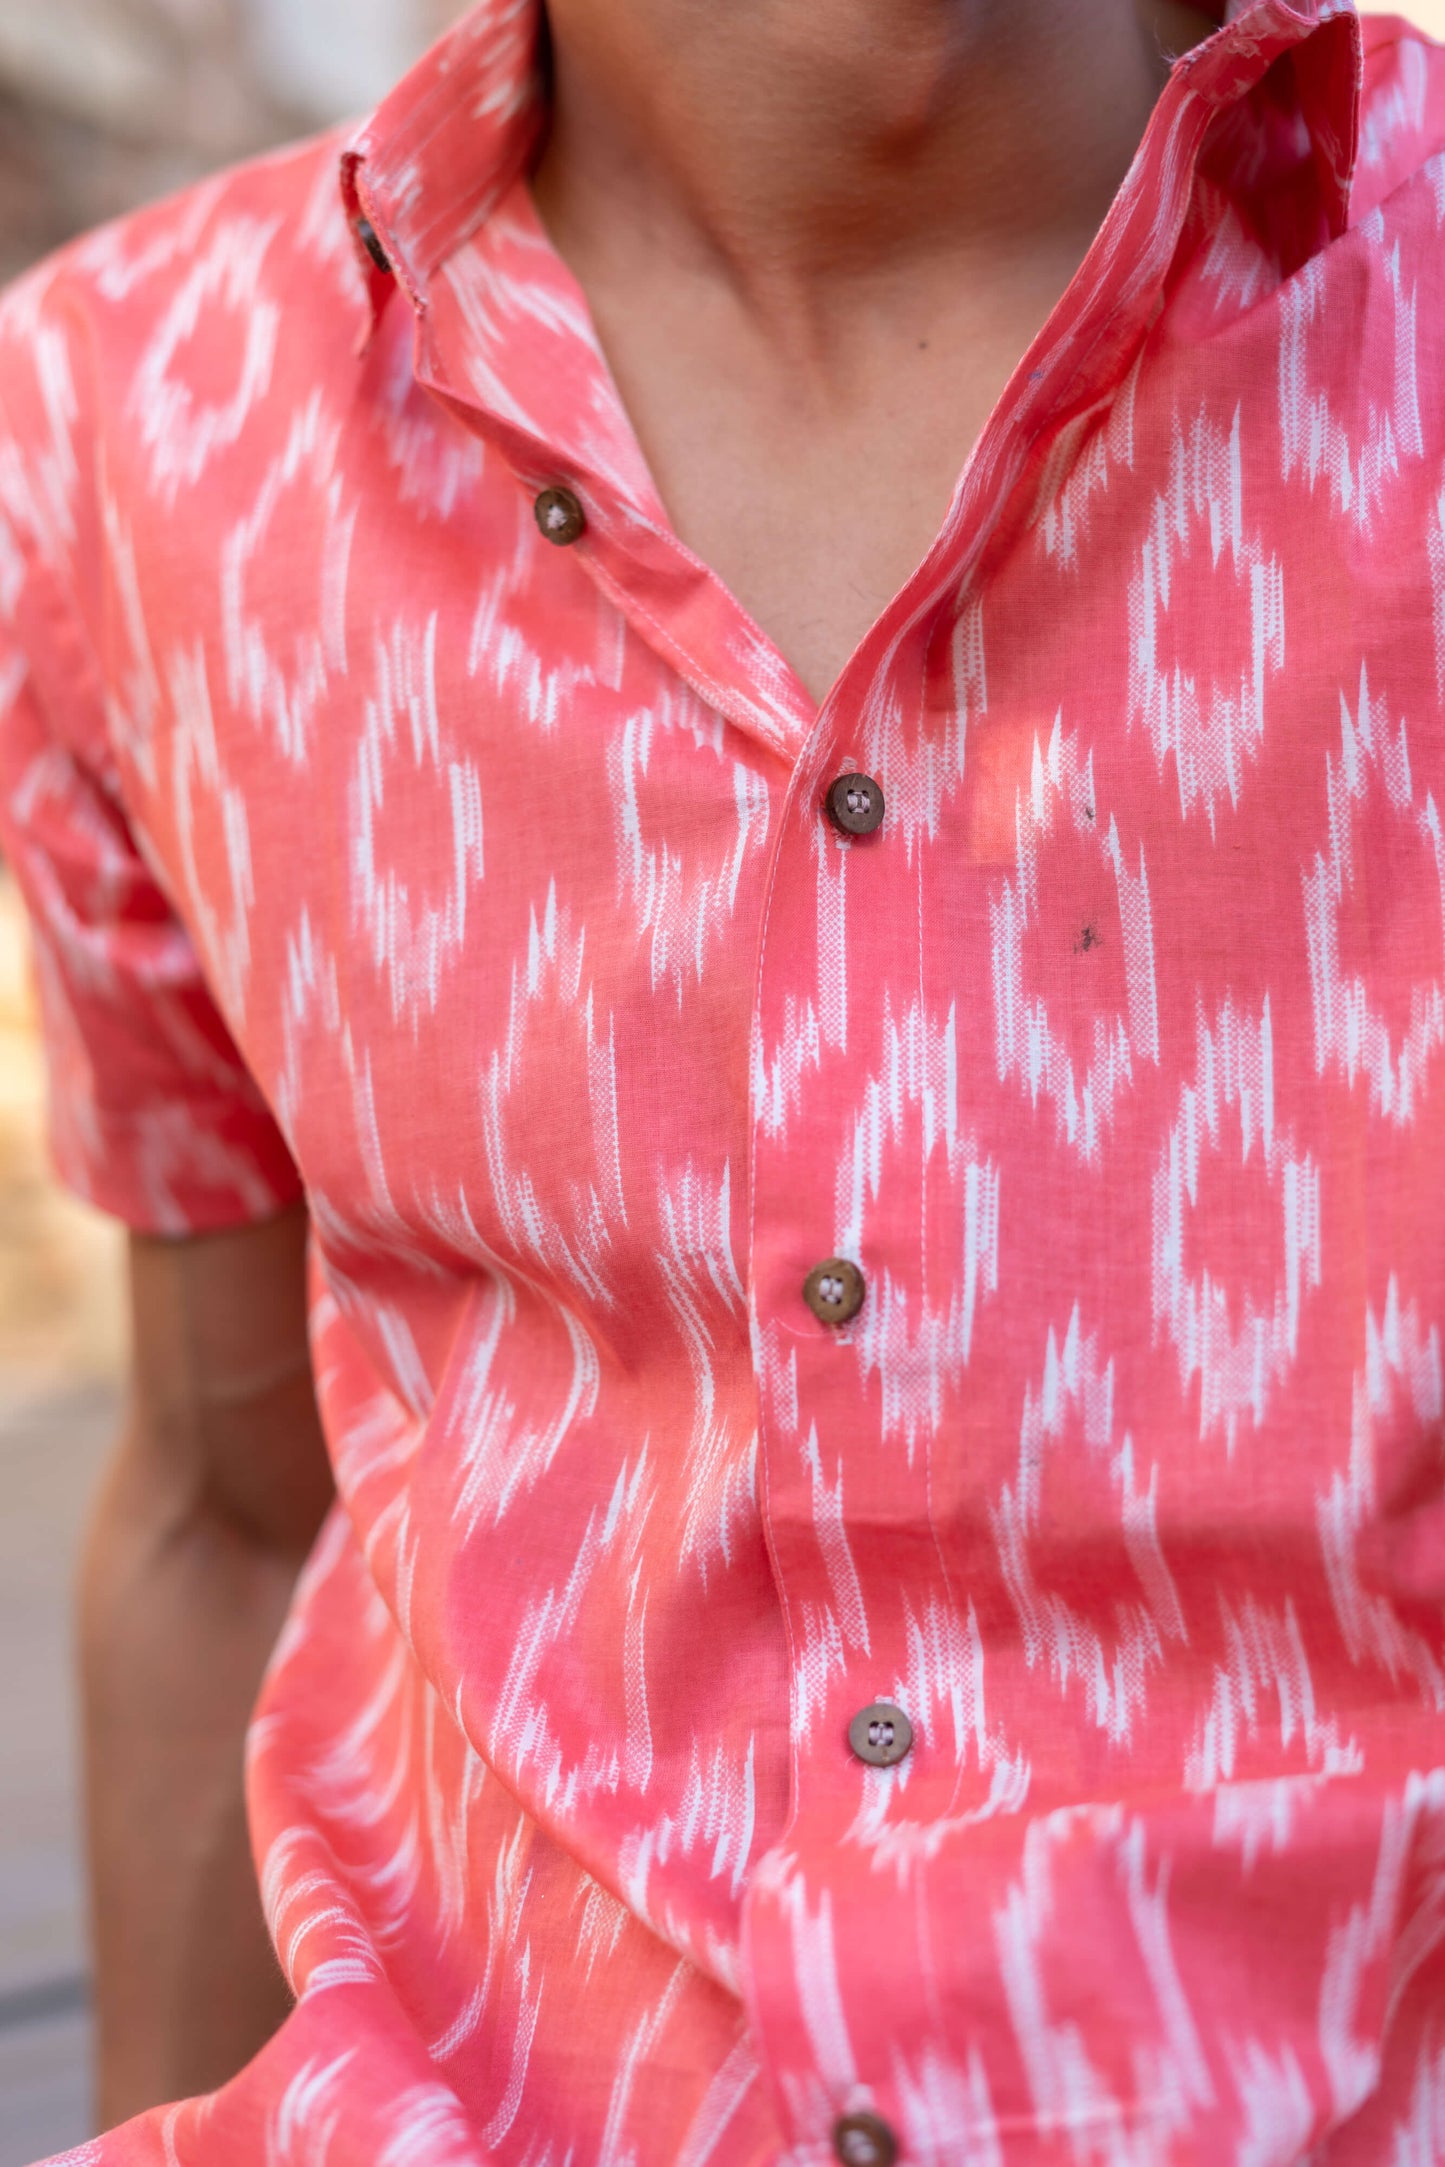 The Pink Half Sleeves Shirt With Ikat Print